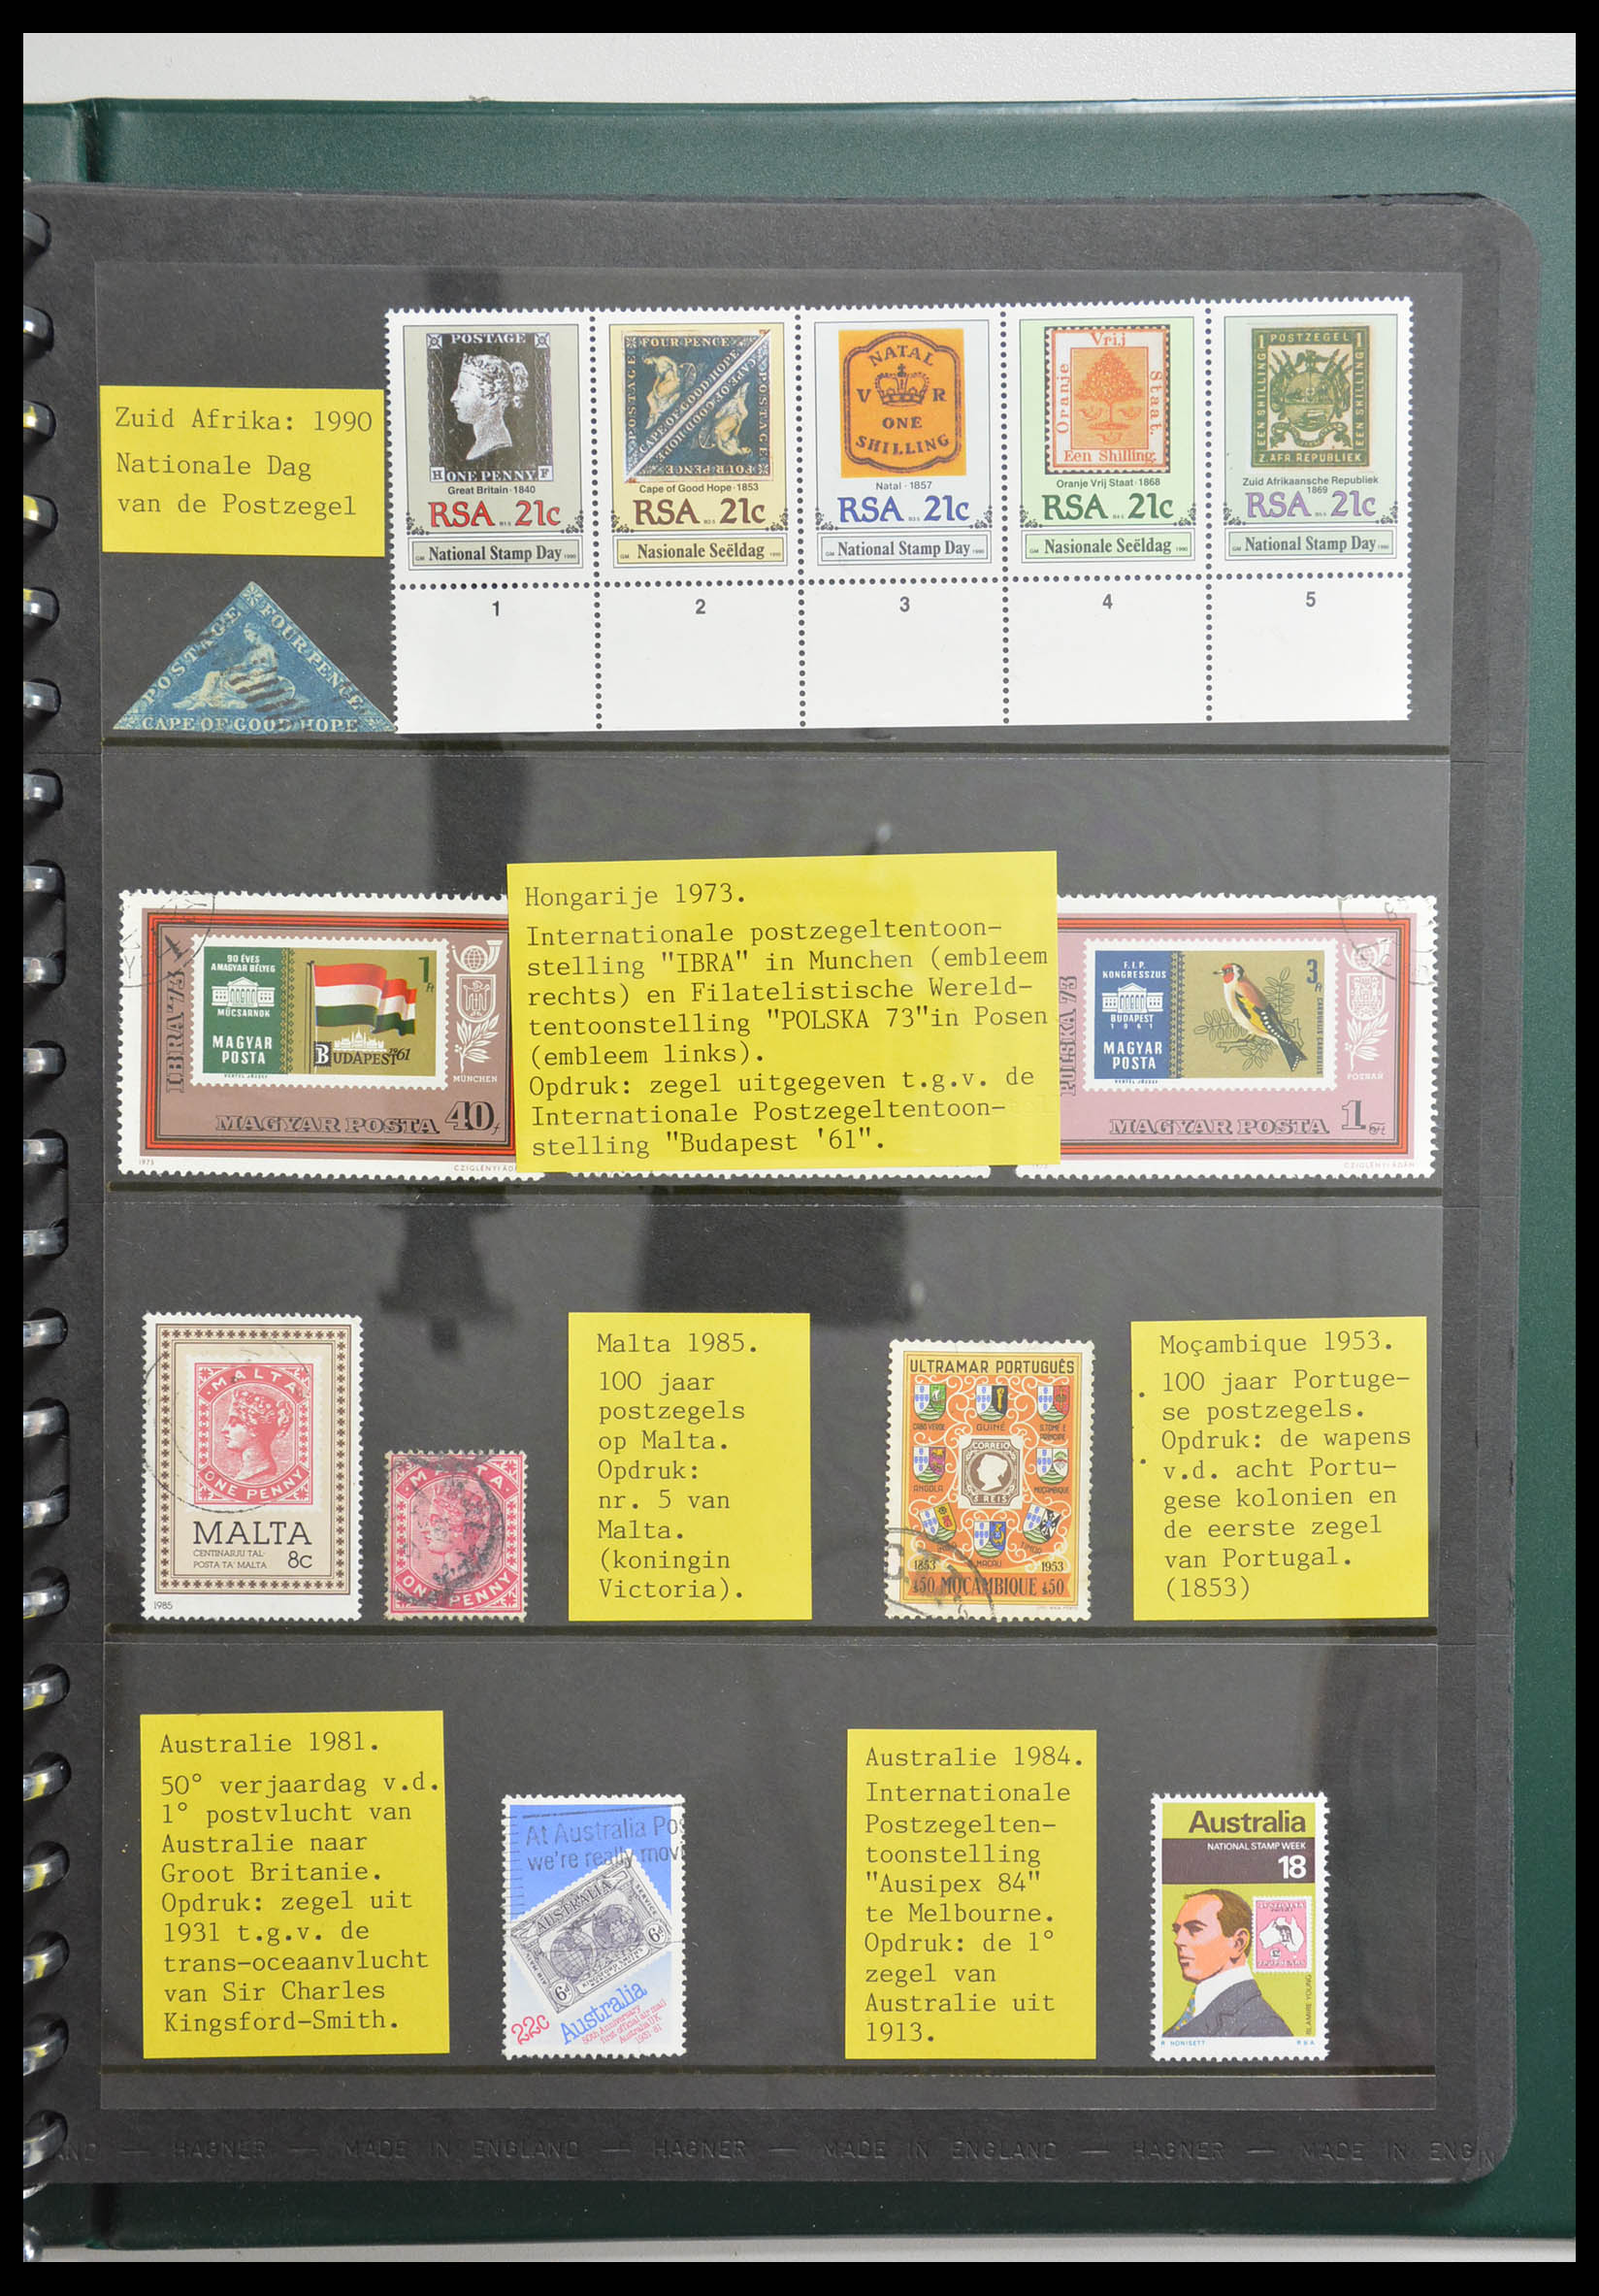 28337 123 - 28337 Postzegel op postzegel 1840-2001.